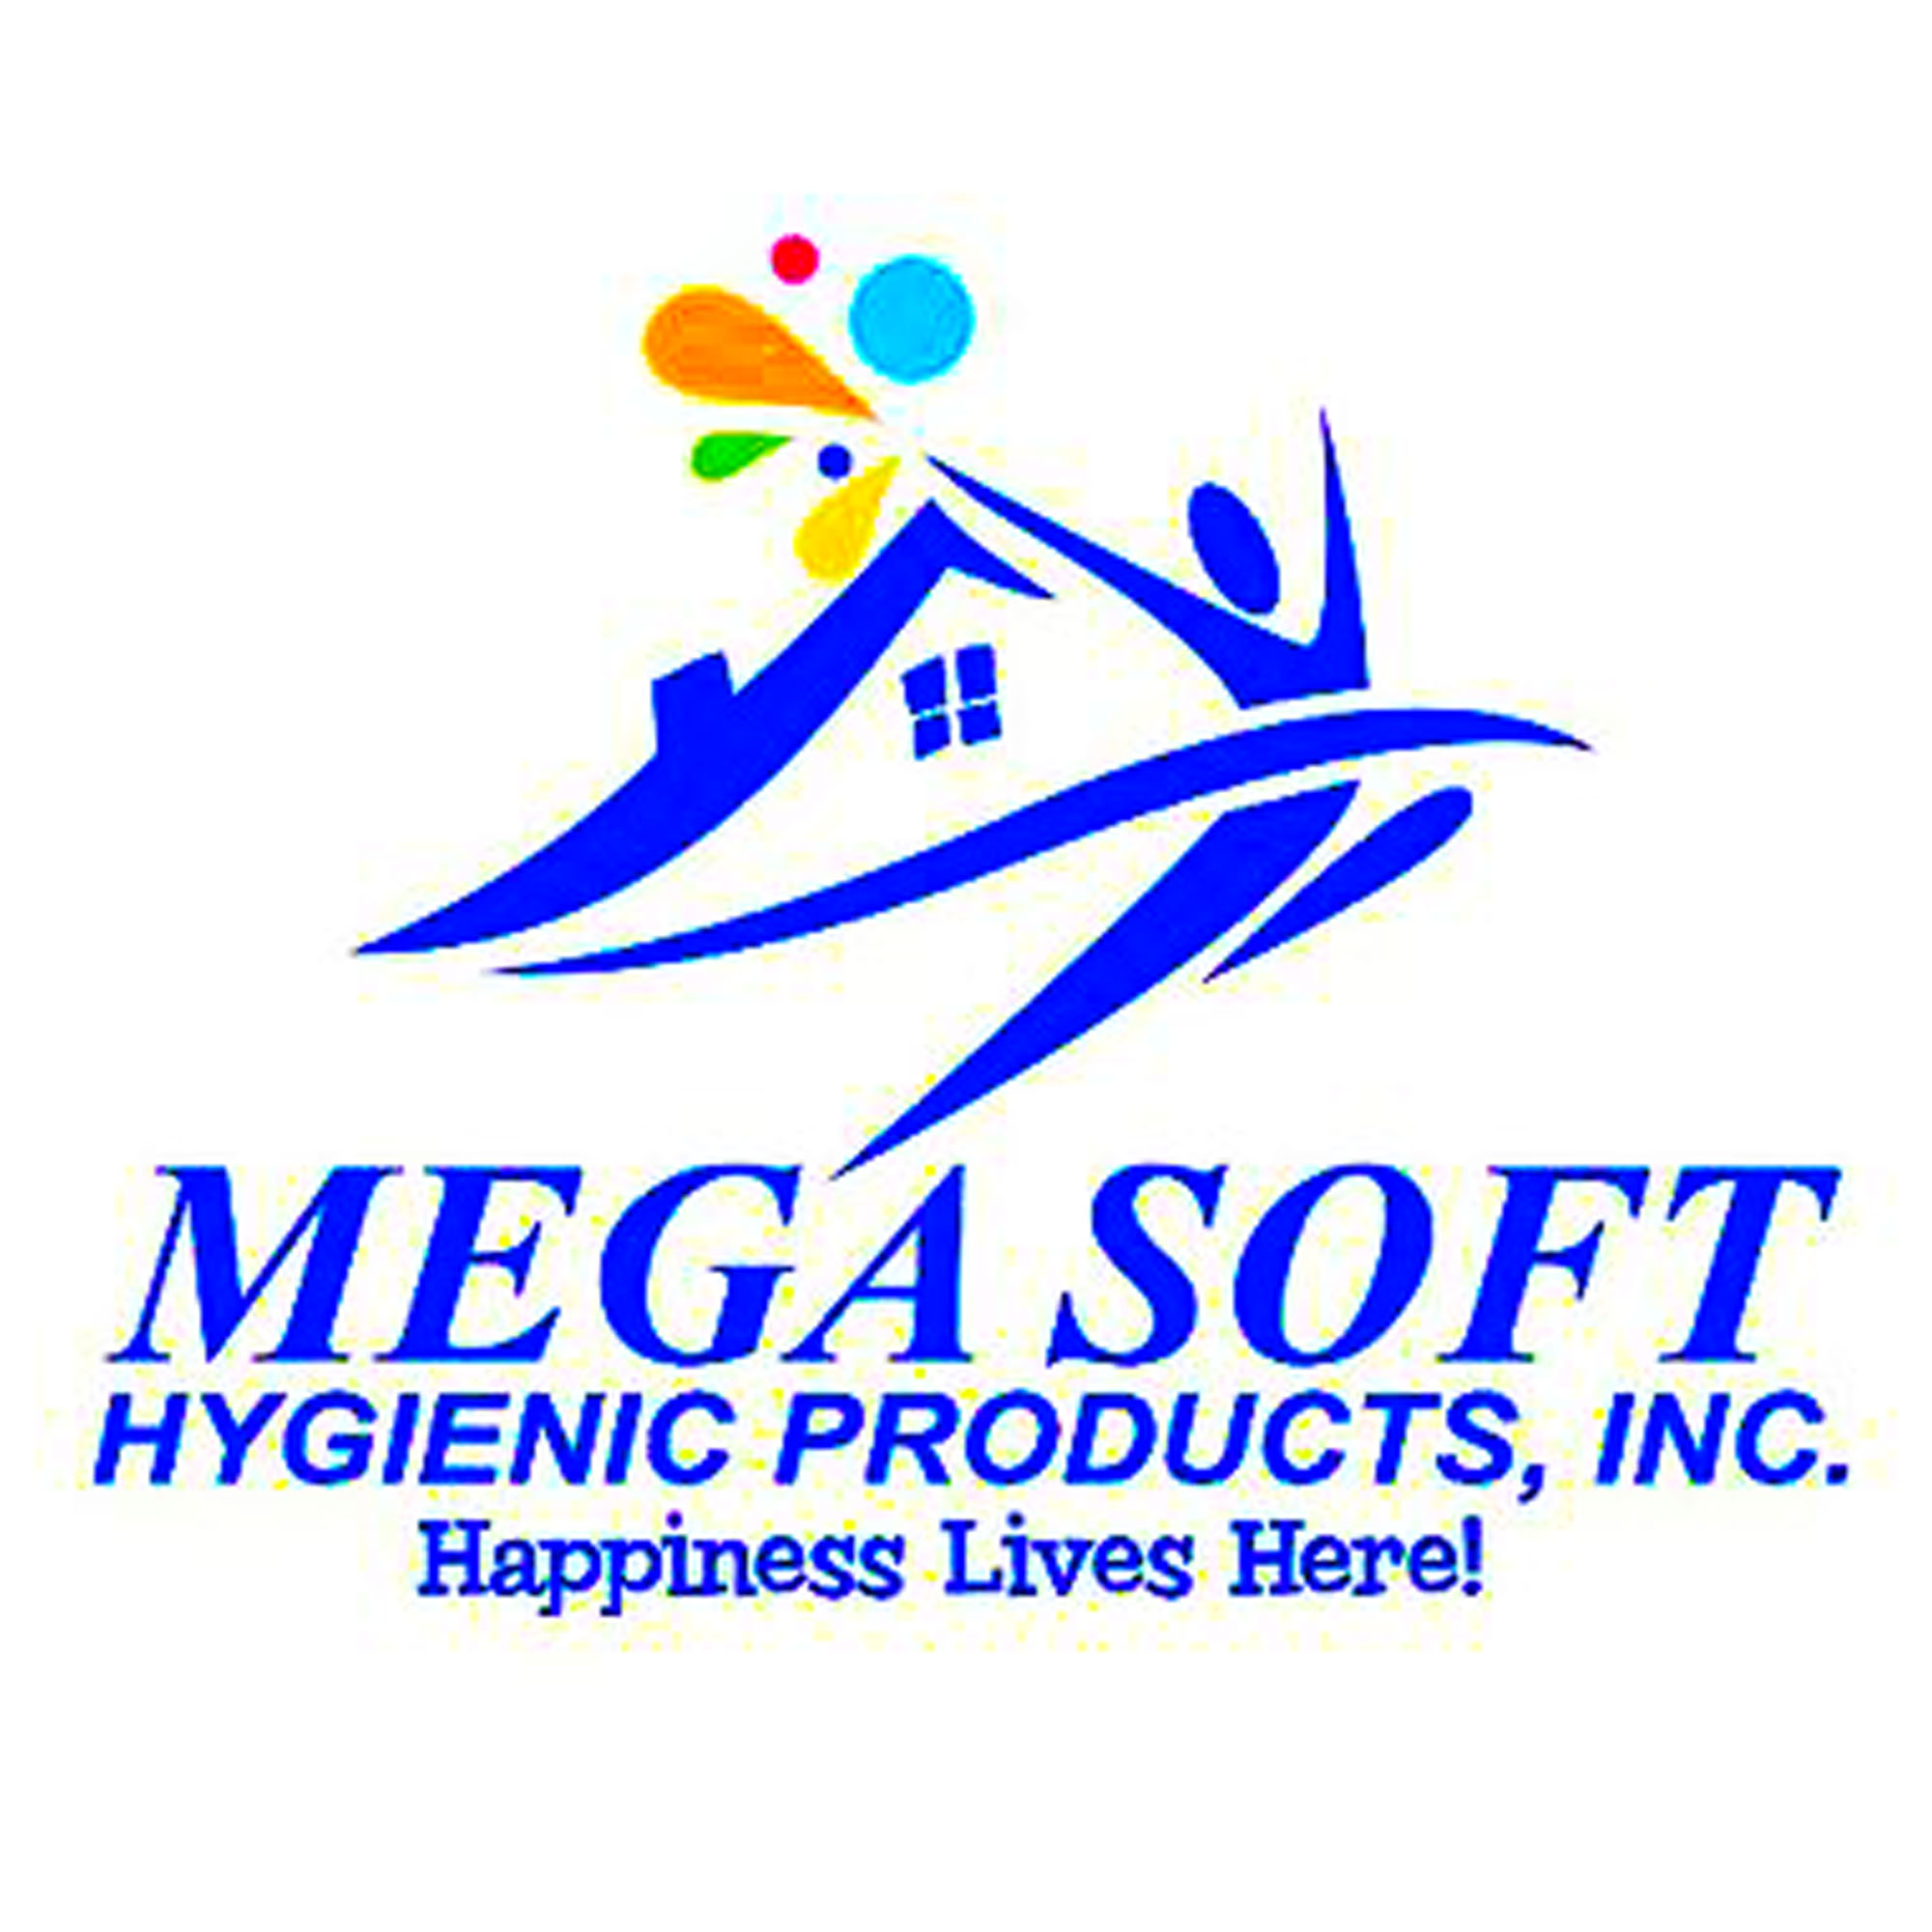 Megasoft Hygienic Products, Inc.